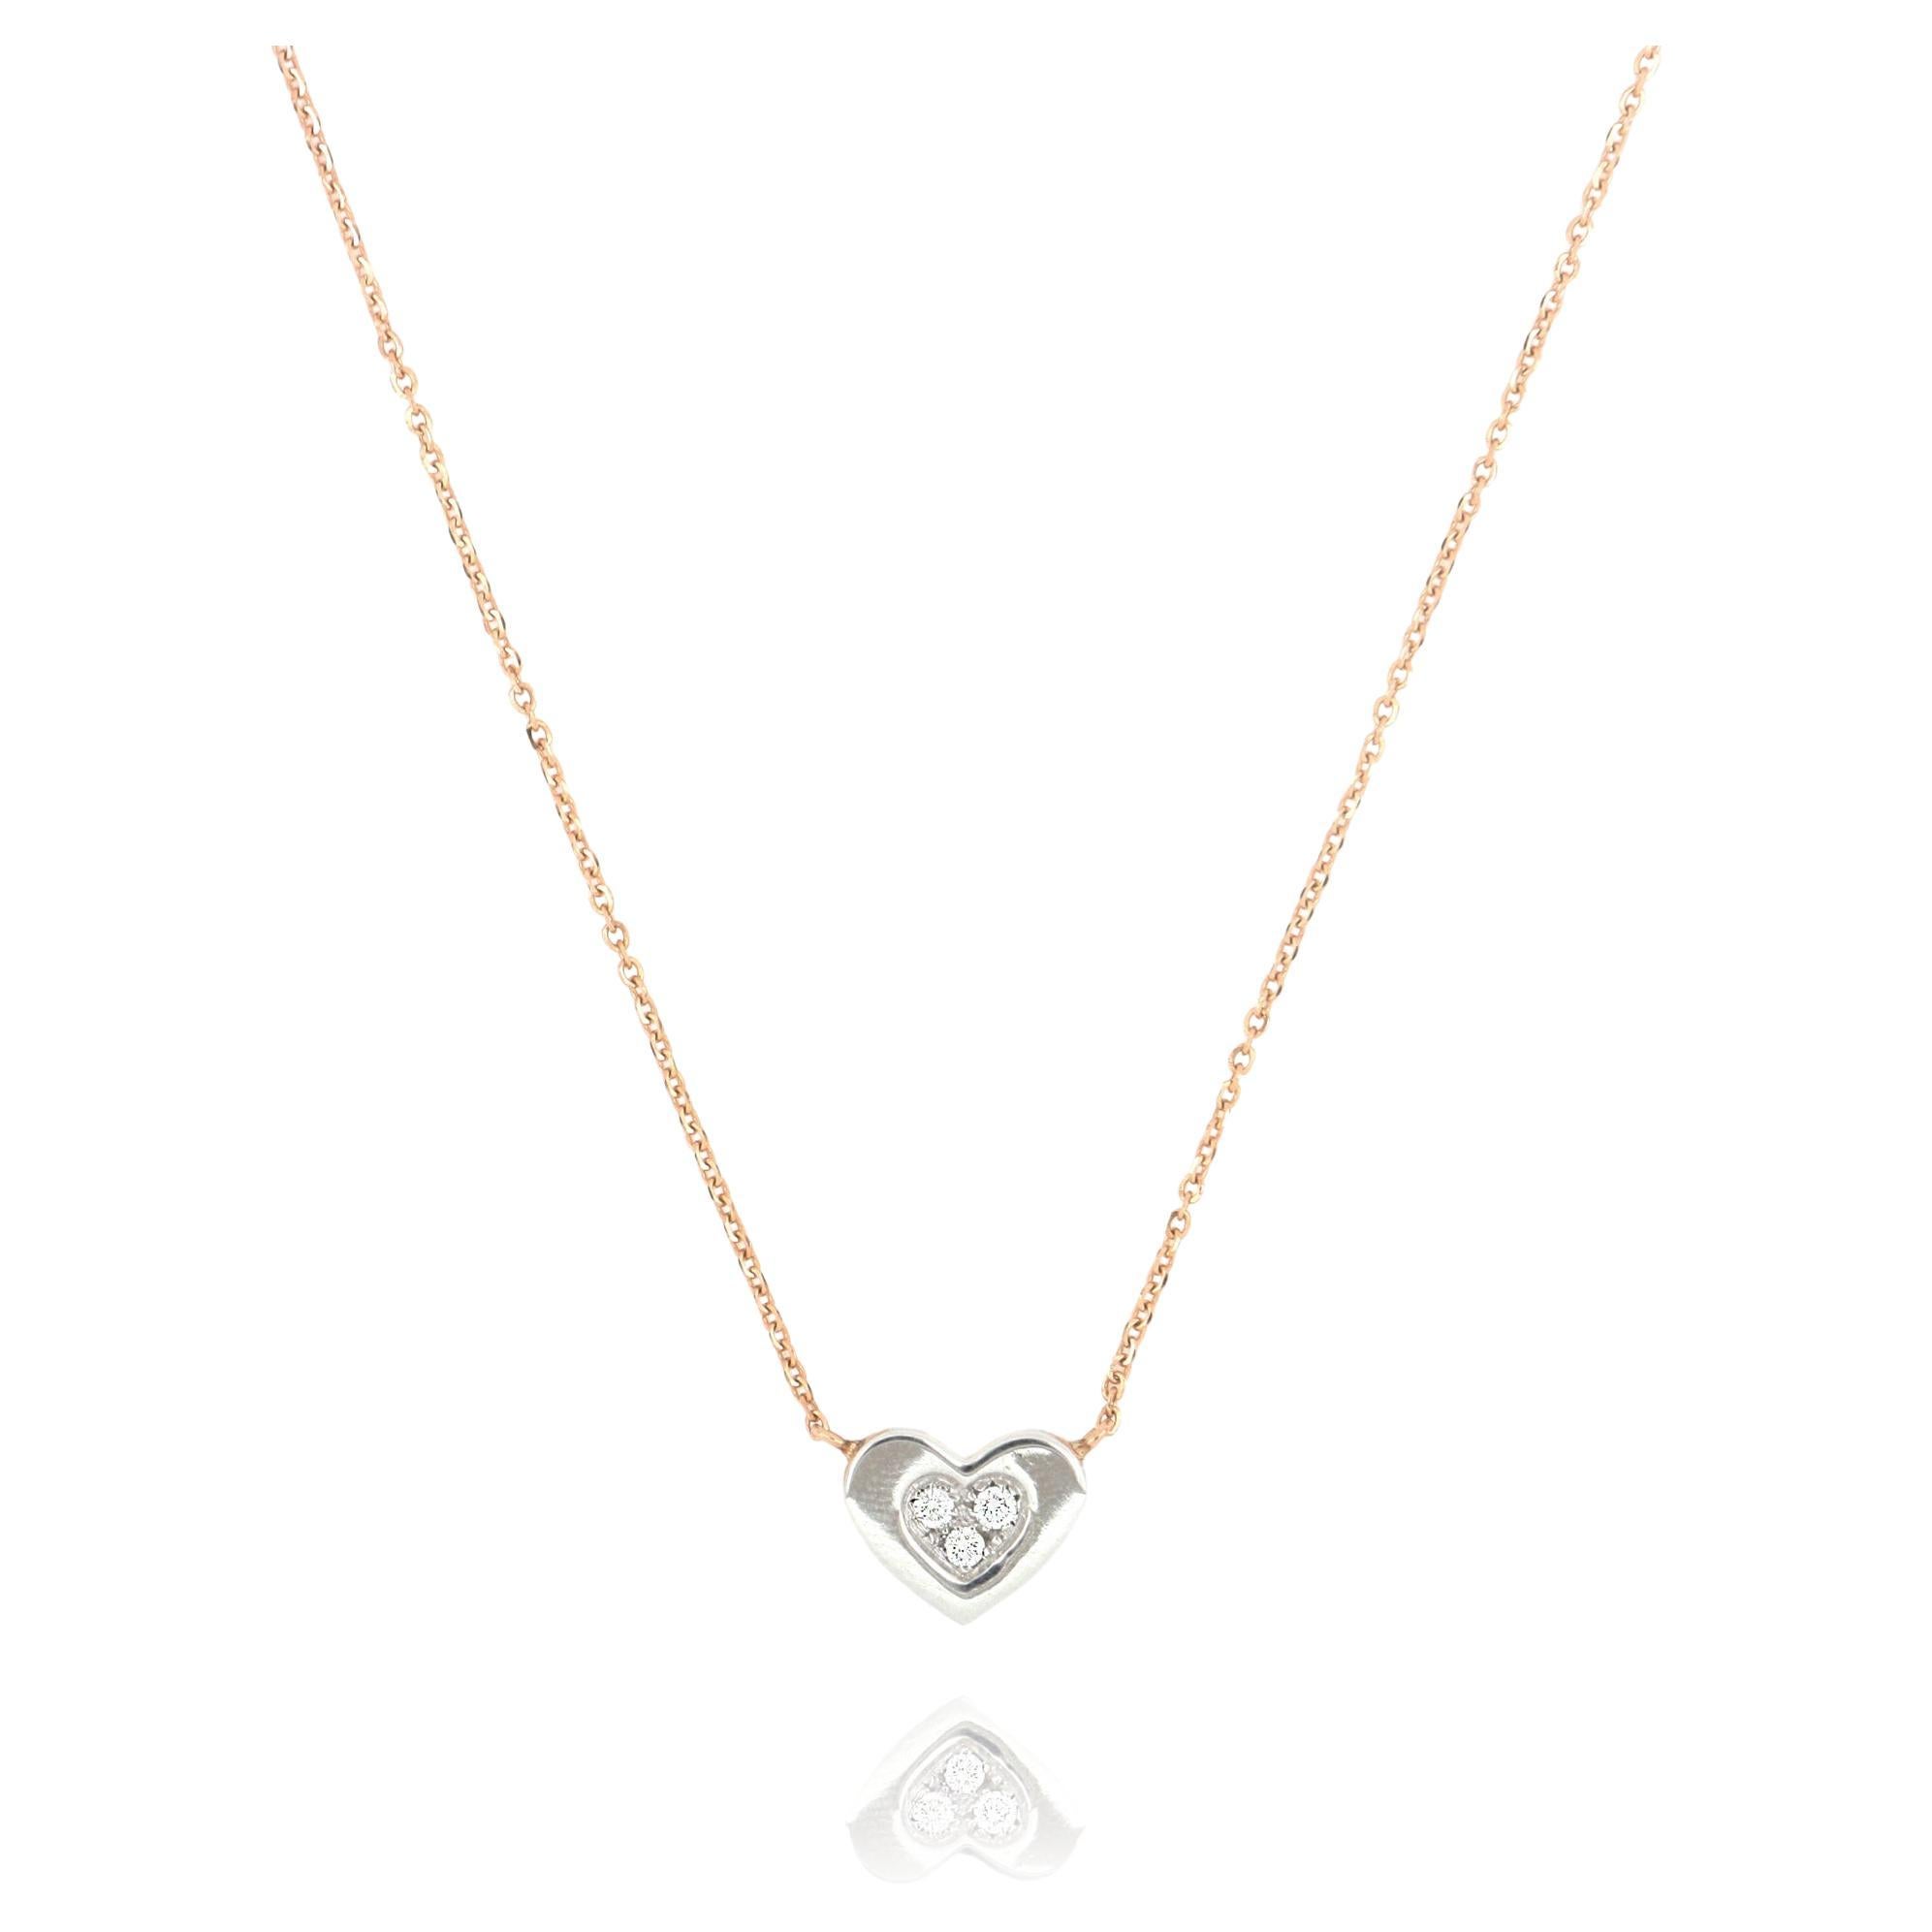 Le Secret Necklace with Heart of Diamonds